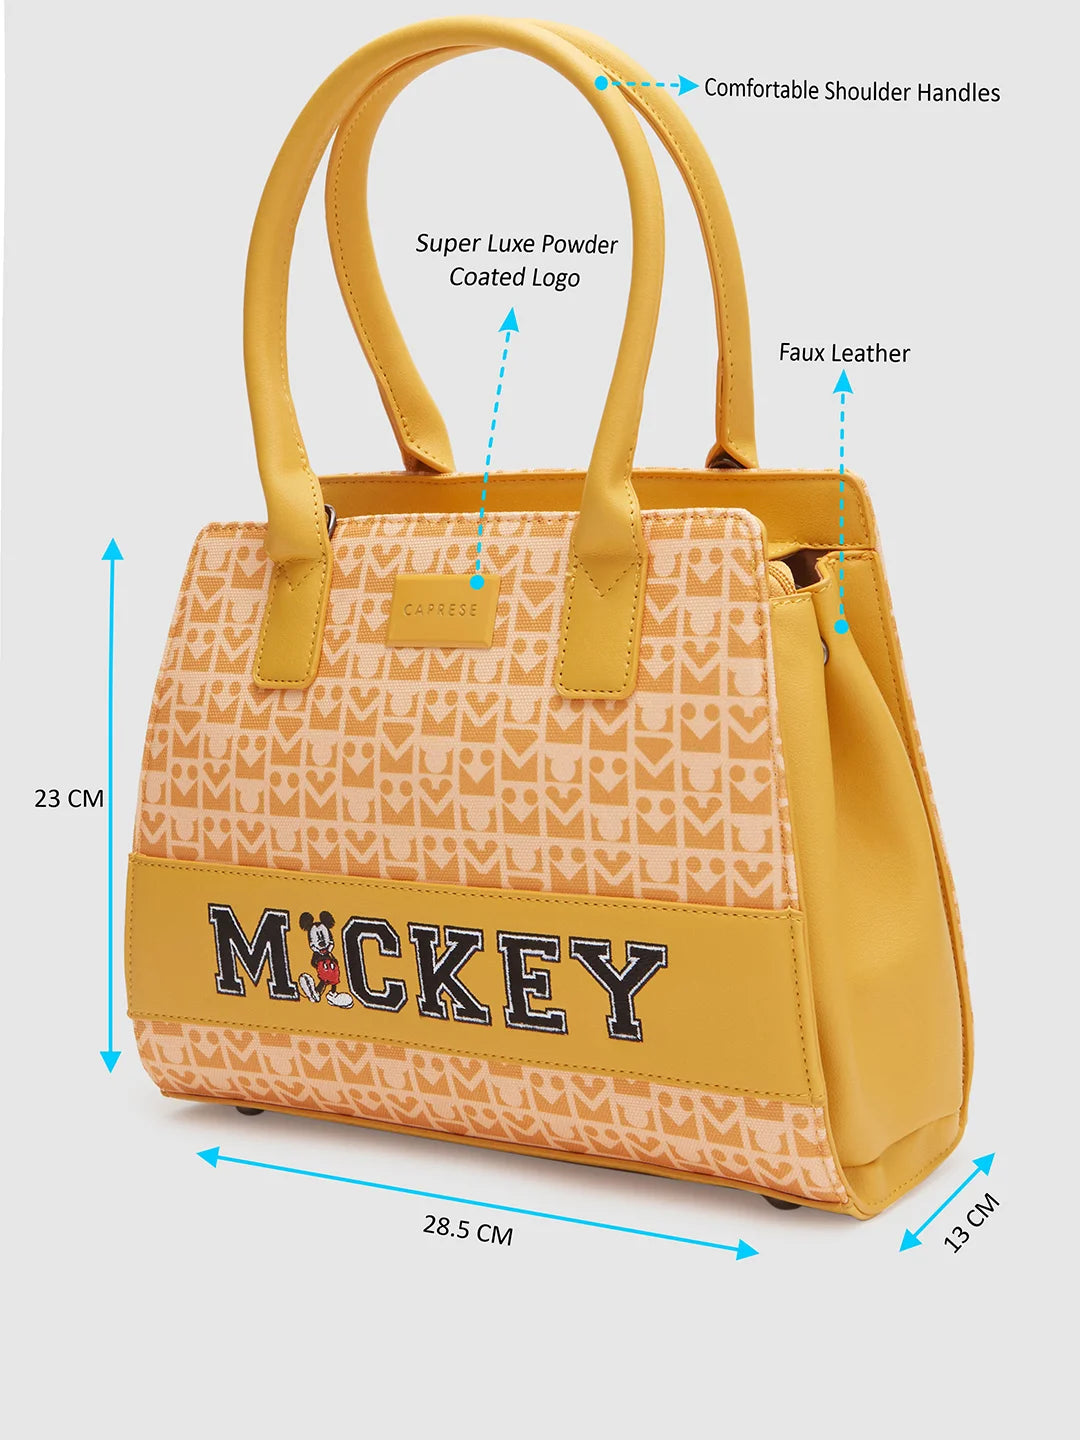 Caprese Disney Inspired Graphic Printed Mickey Mouse Collection Satchel Medium Handbag